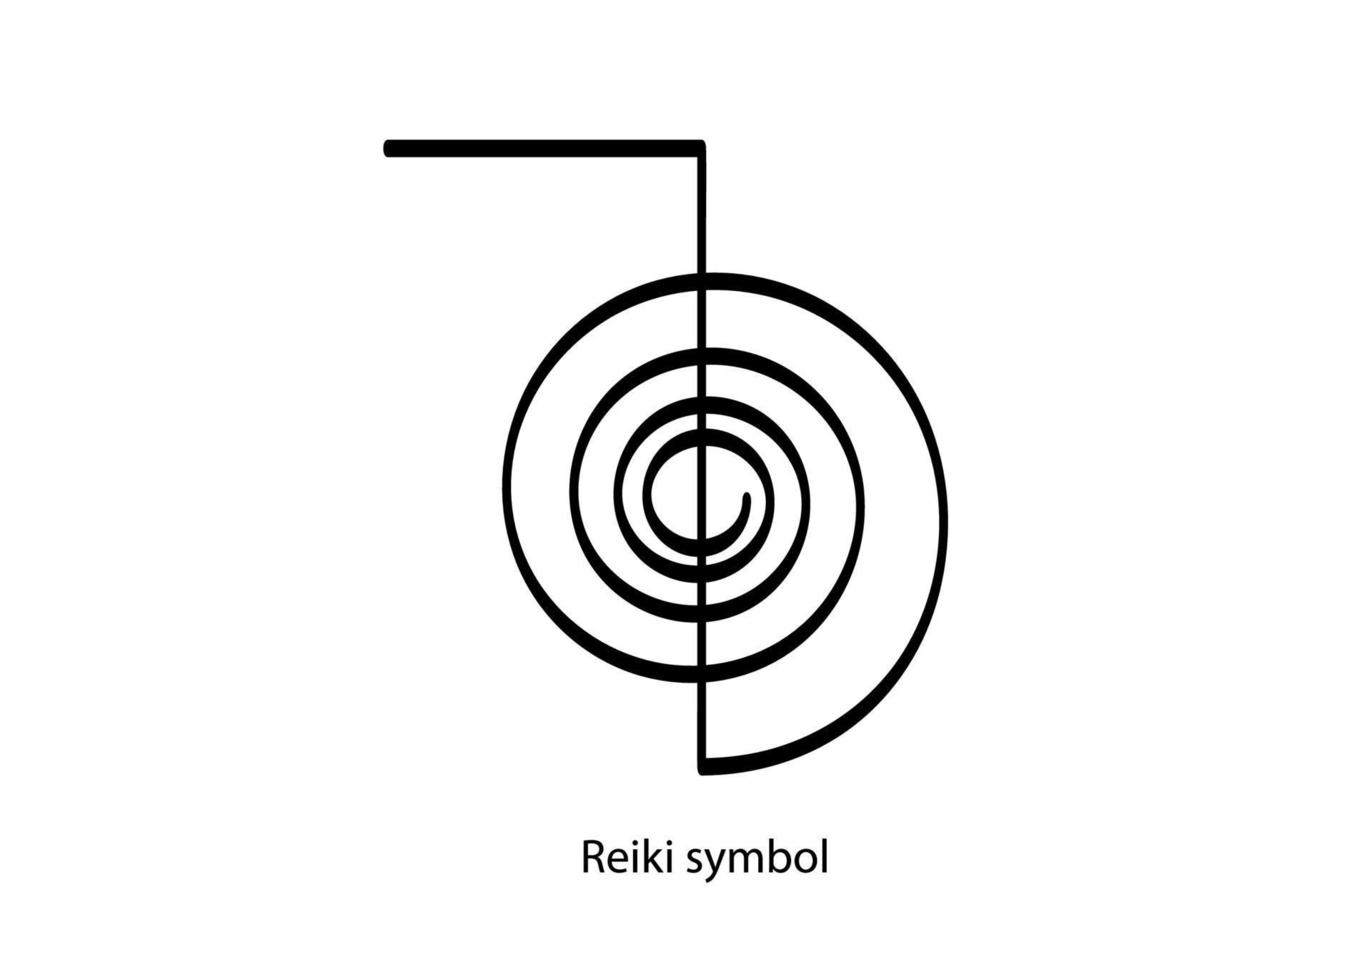 reiki símbolo infografía logo icono, un signo sagrado. energía espiritual. medicina alternativa. Espiral mística esotérica, vector de tatuaje negro aislado sobre fondo blanco.